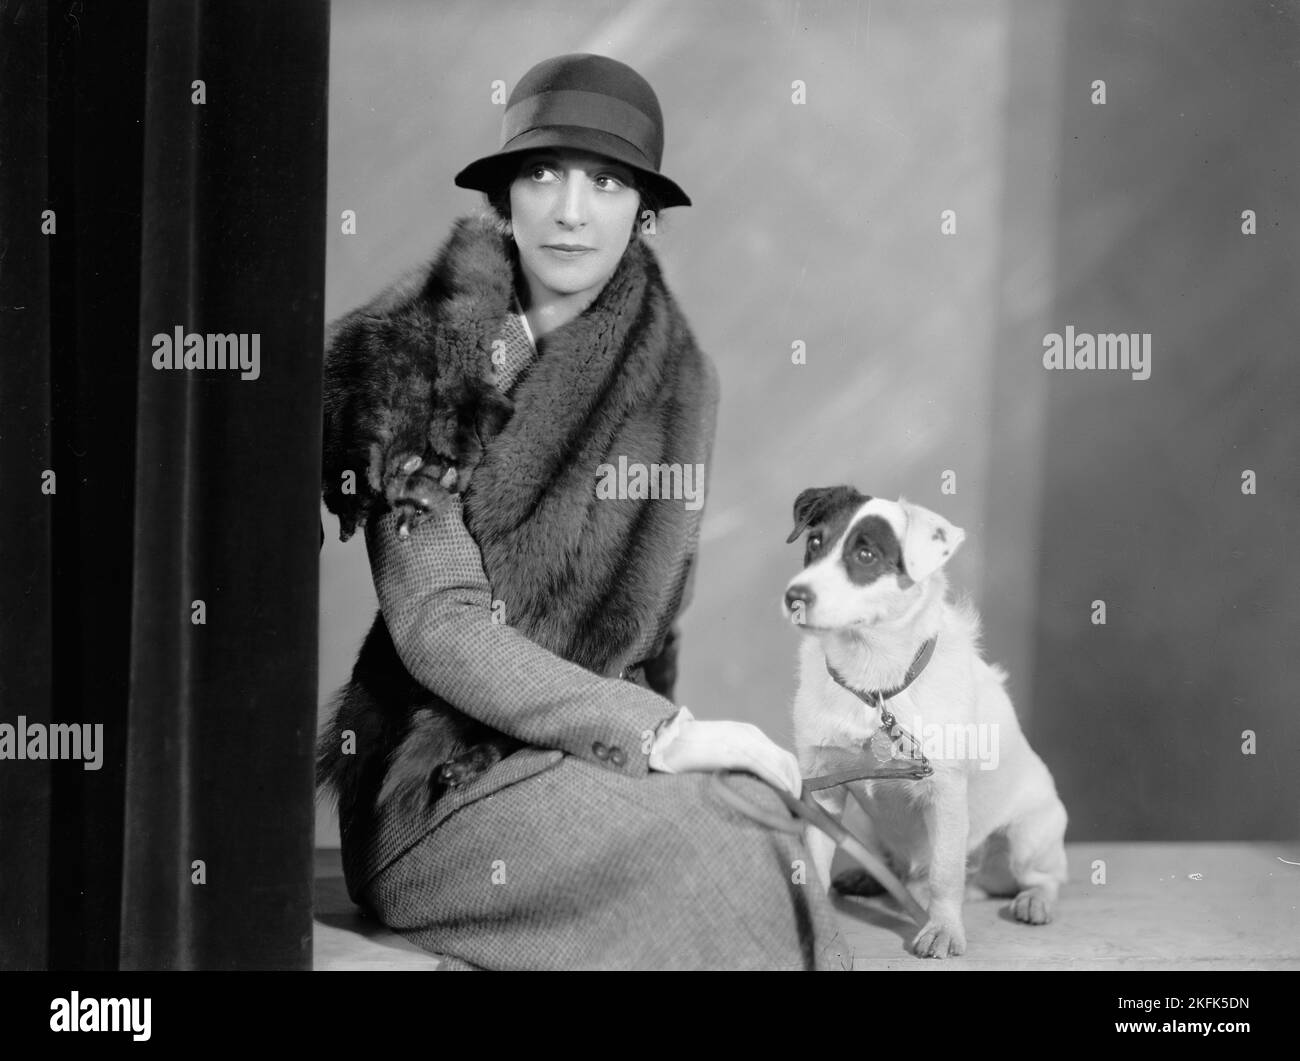 Баталов дама с собачкой кого сыграл. Дама с собачкой 1960. Дама с собачкой фотосессия. Дама с собачкой ретро. Современная дама с собачкой.